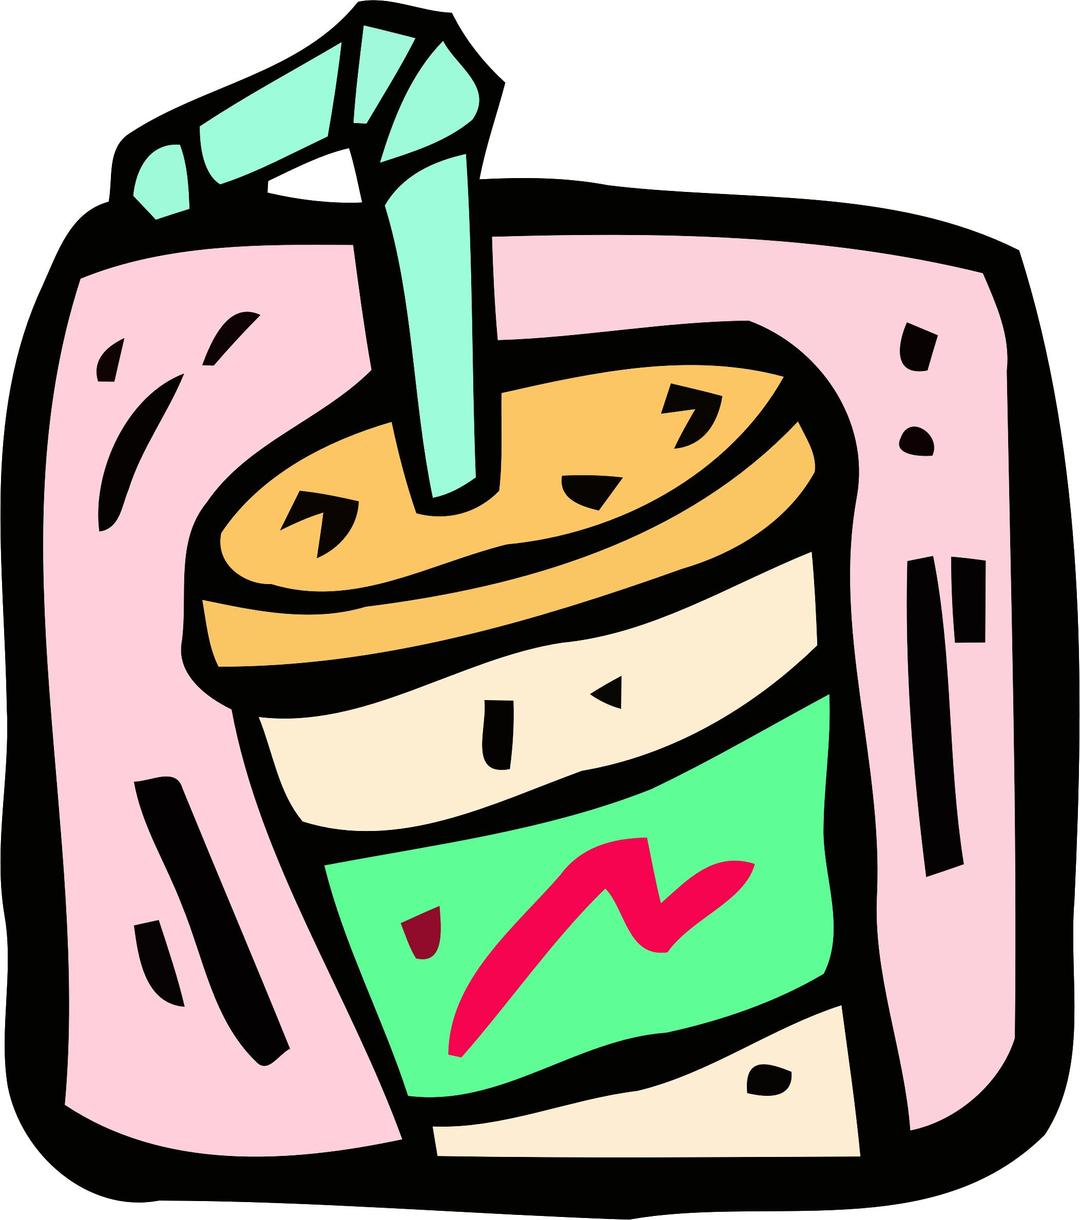 Food and drink icon - milkshake png transparent